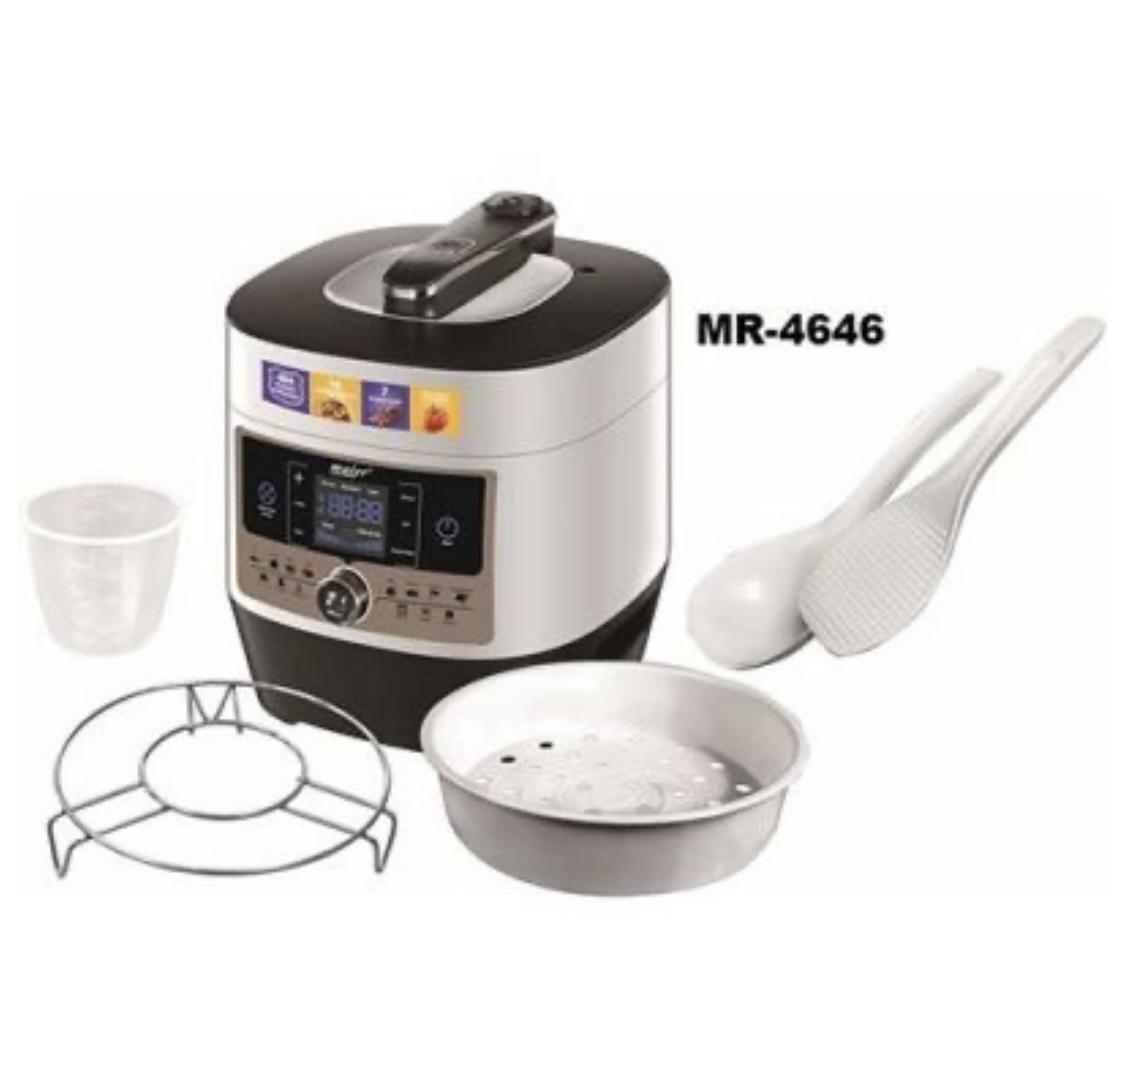 زودپز و مولتی کوکر مایر مدل MR-4646 ا pressure cooker and multicooker brand Meyer 1000 watts6 liters model MR-4646